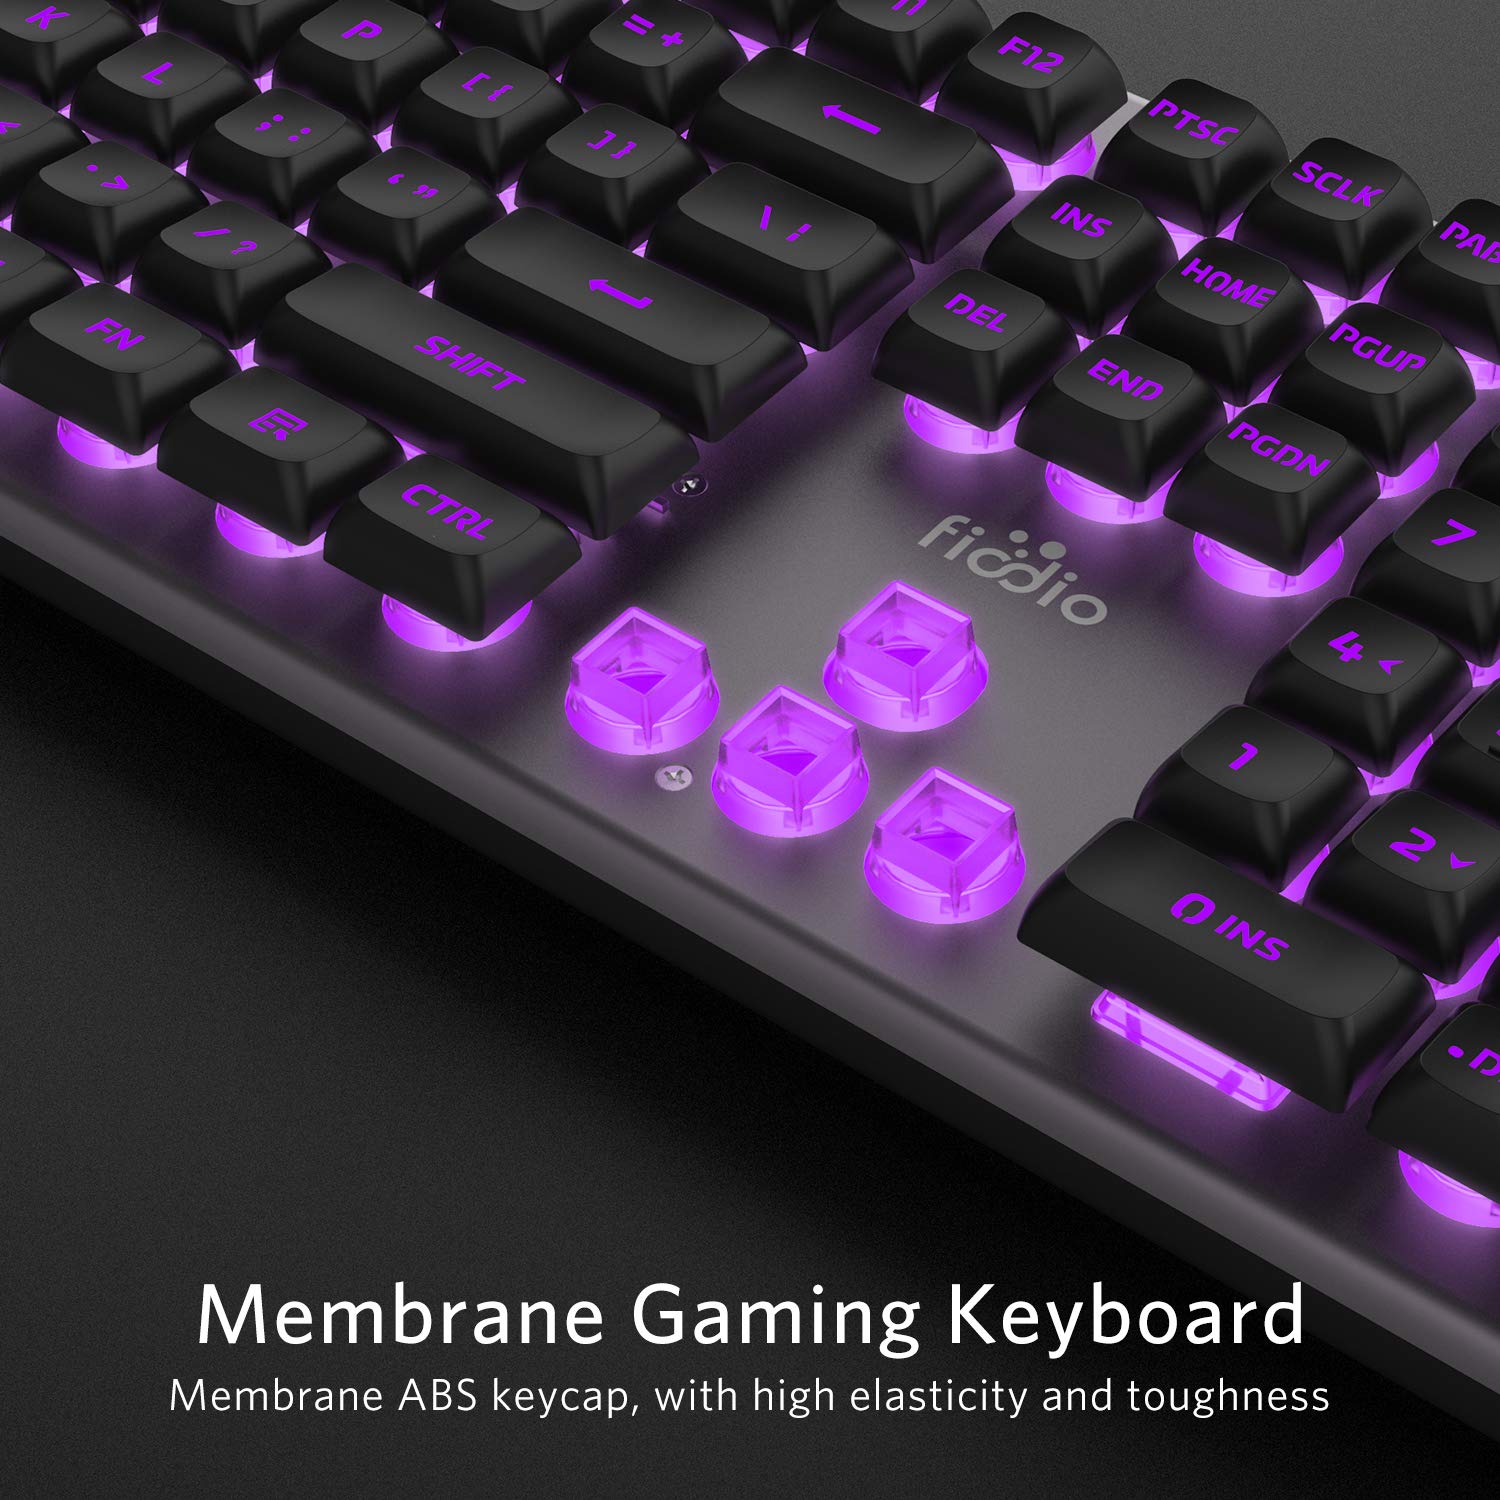 FIODIO Membrane Gaming Keyboard, Wired RGB Rainbow Backlit Keyboard, Ergonomic Standard Keyboard for Desktop, Computer and PC, Silver-Black (FK-2028-US)